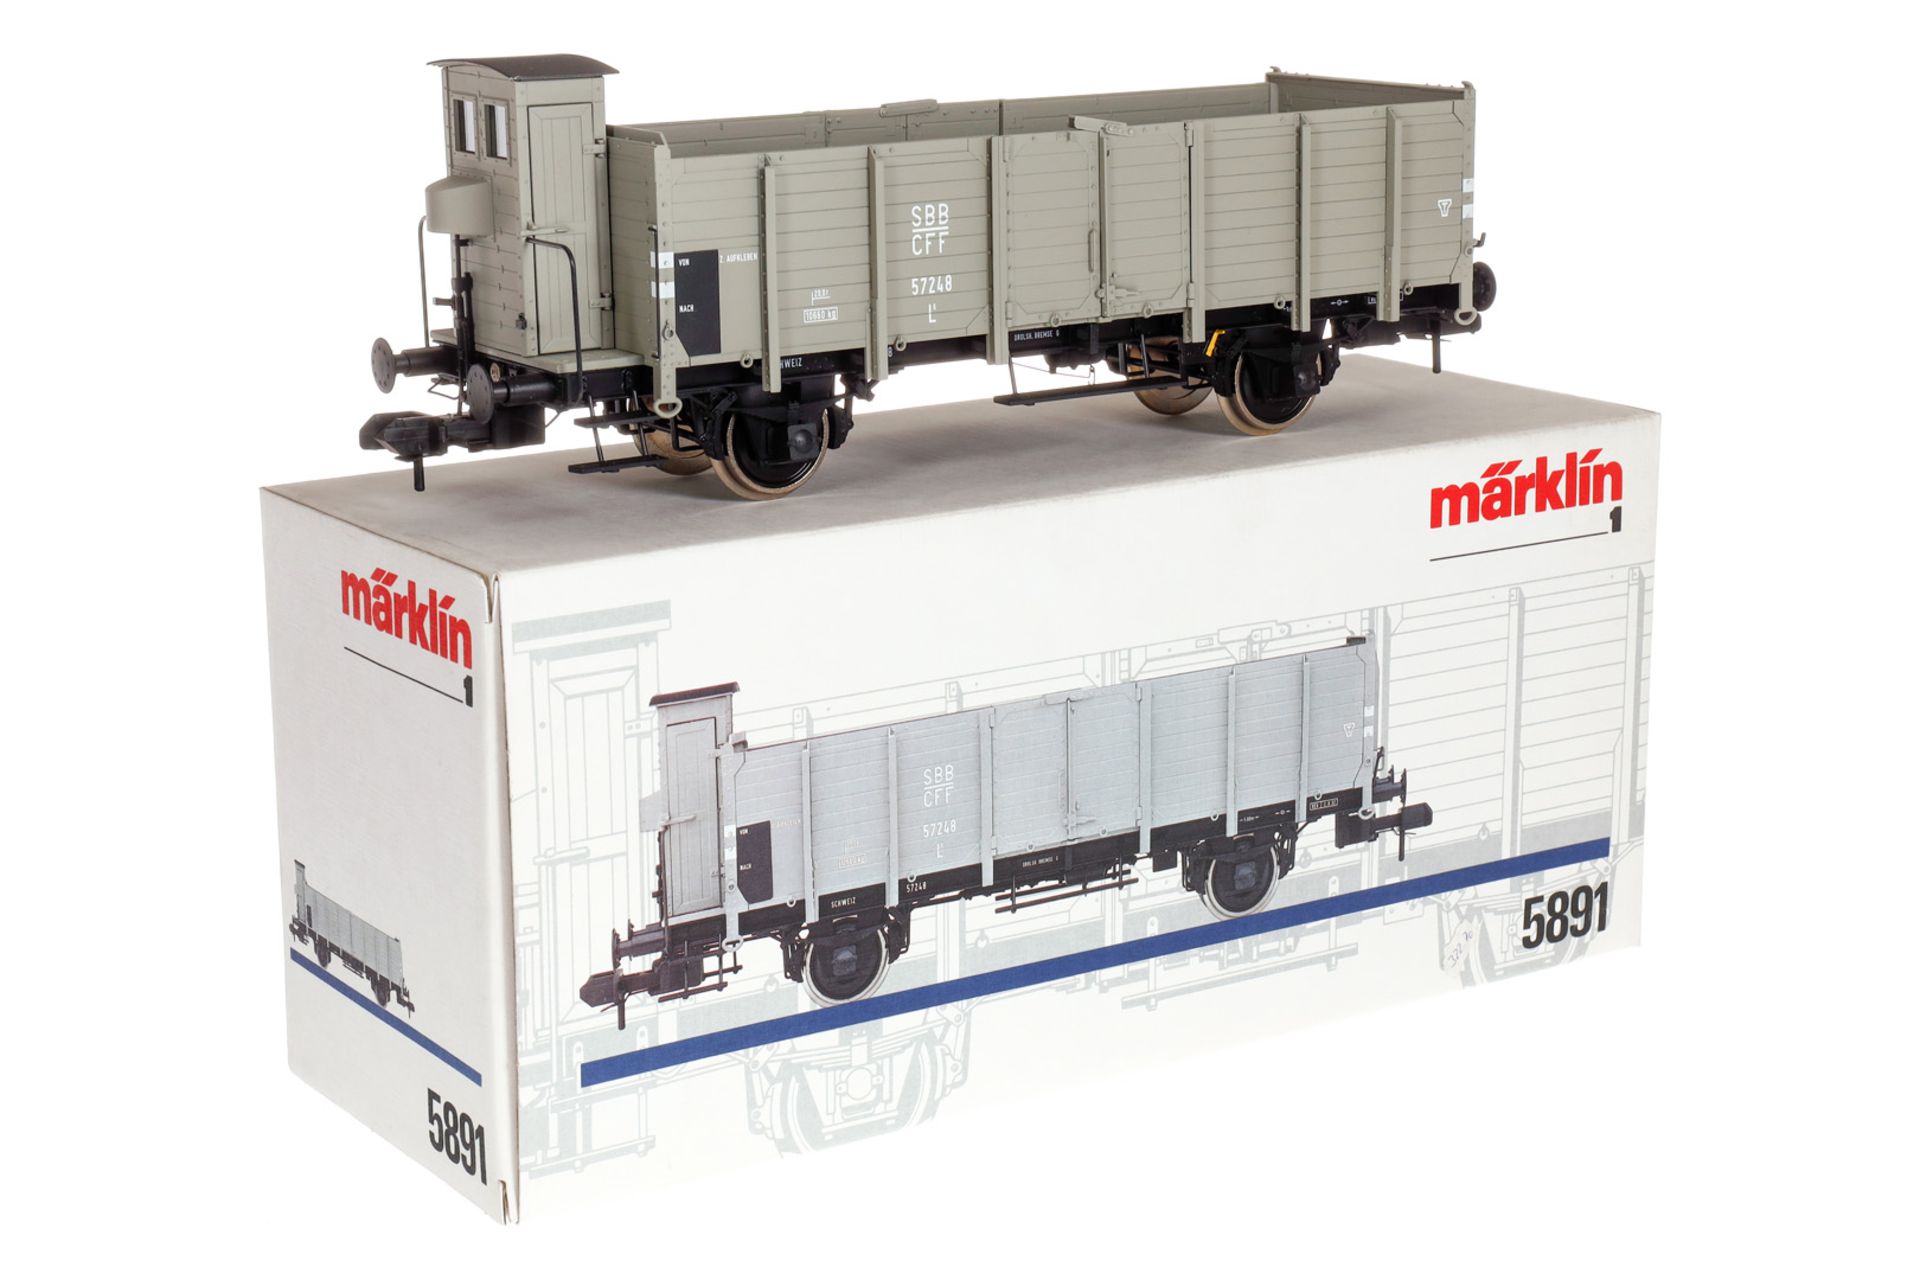 Märklin offener Güterwagen 5891, Spur 1, grau, Alterungsspuren, L 31, OK, Z 1-2